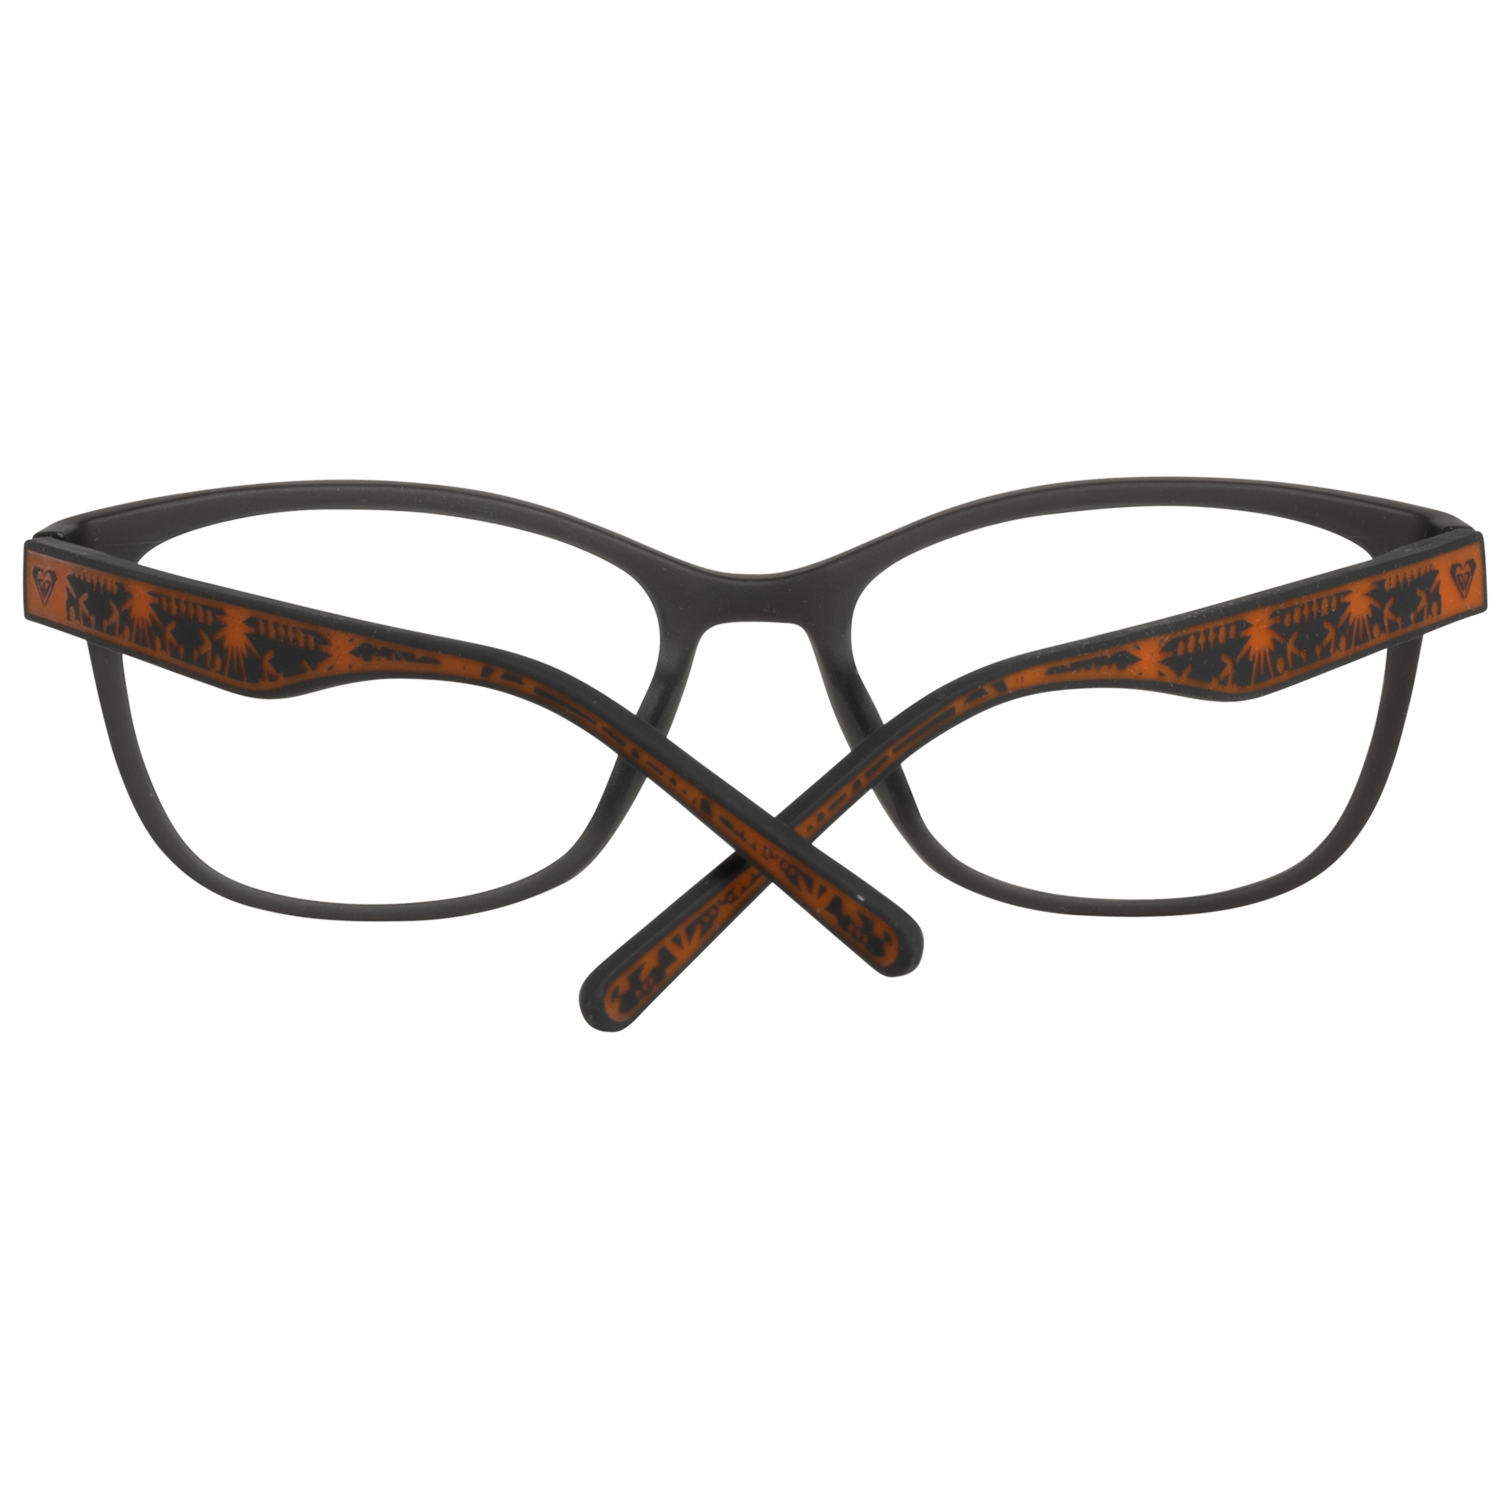 Roxy Frames Roxy Glasses Optical Frame ERJEG03050 AGRY 53 Eyeglasses Eyewear UK USA Australia 